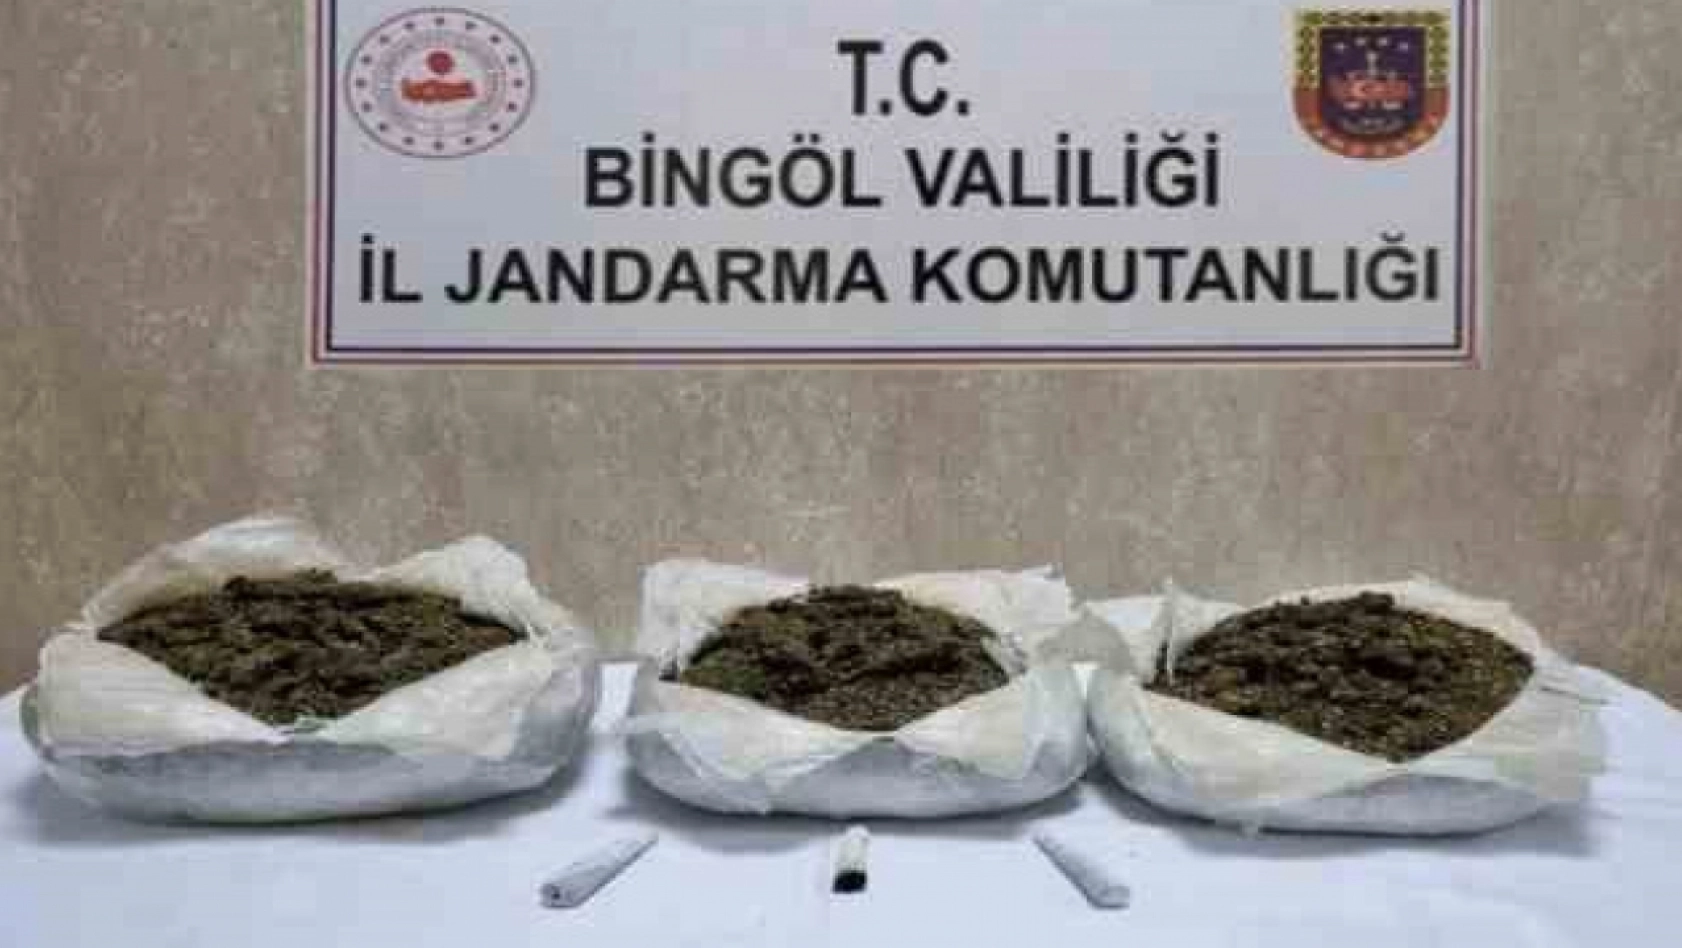 Bingöl'de 3,5 kilo esrar ele geçirildi: 4 gözaltı